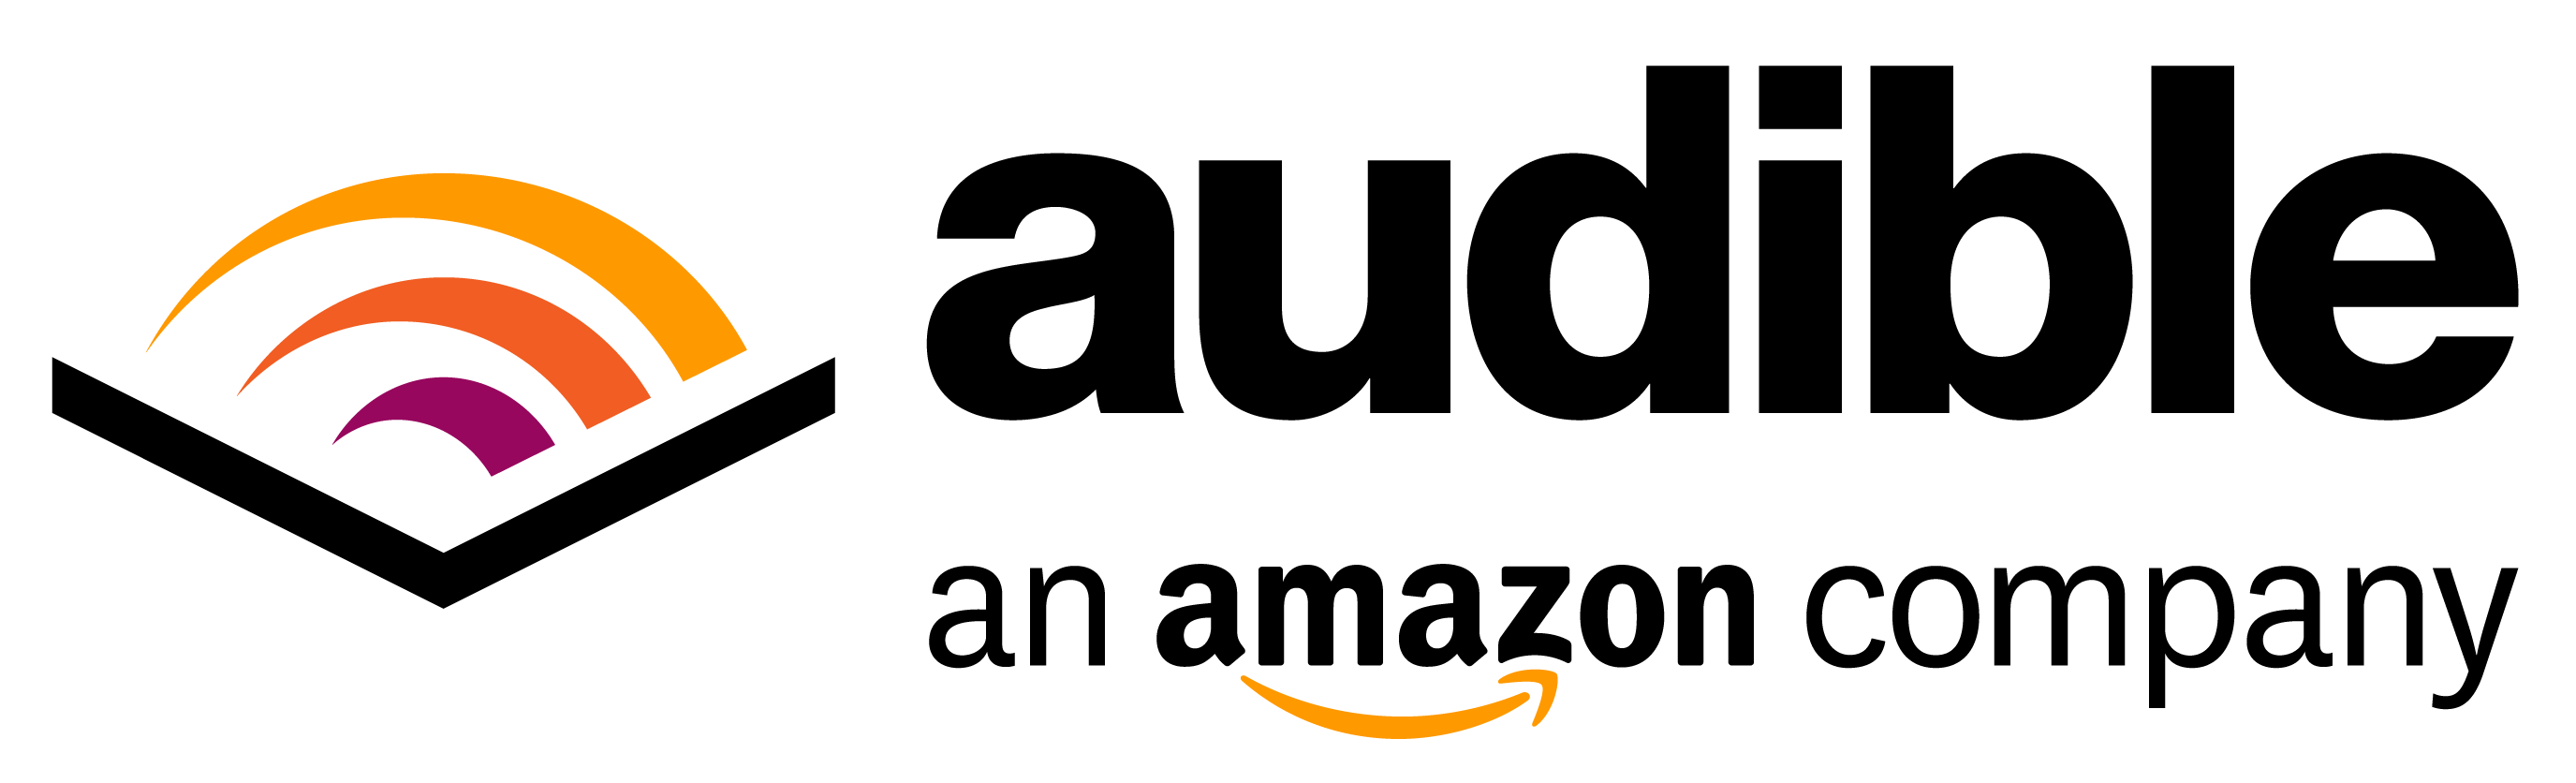 Audible Logo - Amazon Audible Promotion: Get 2 Months Free + $10 Credit